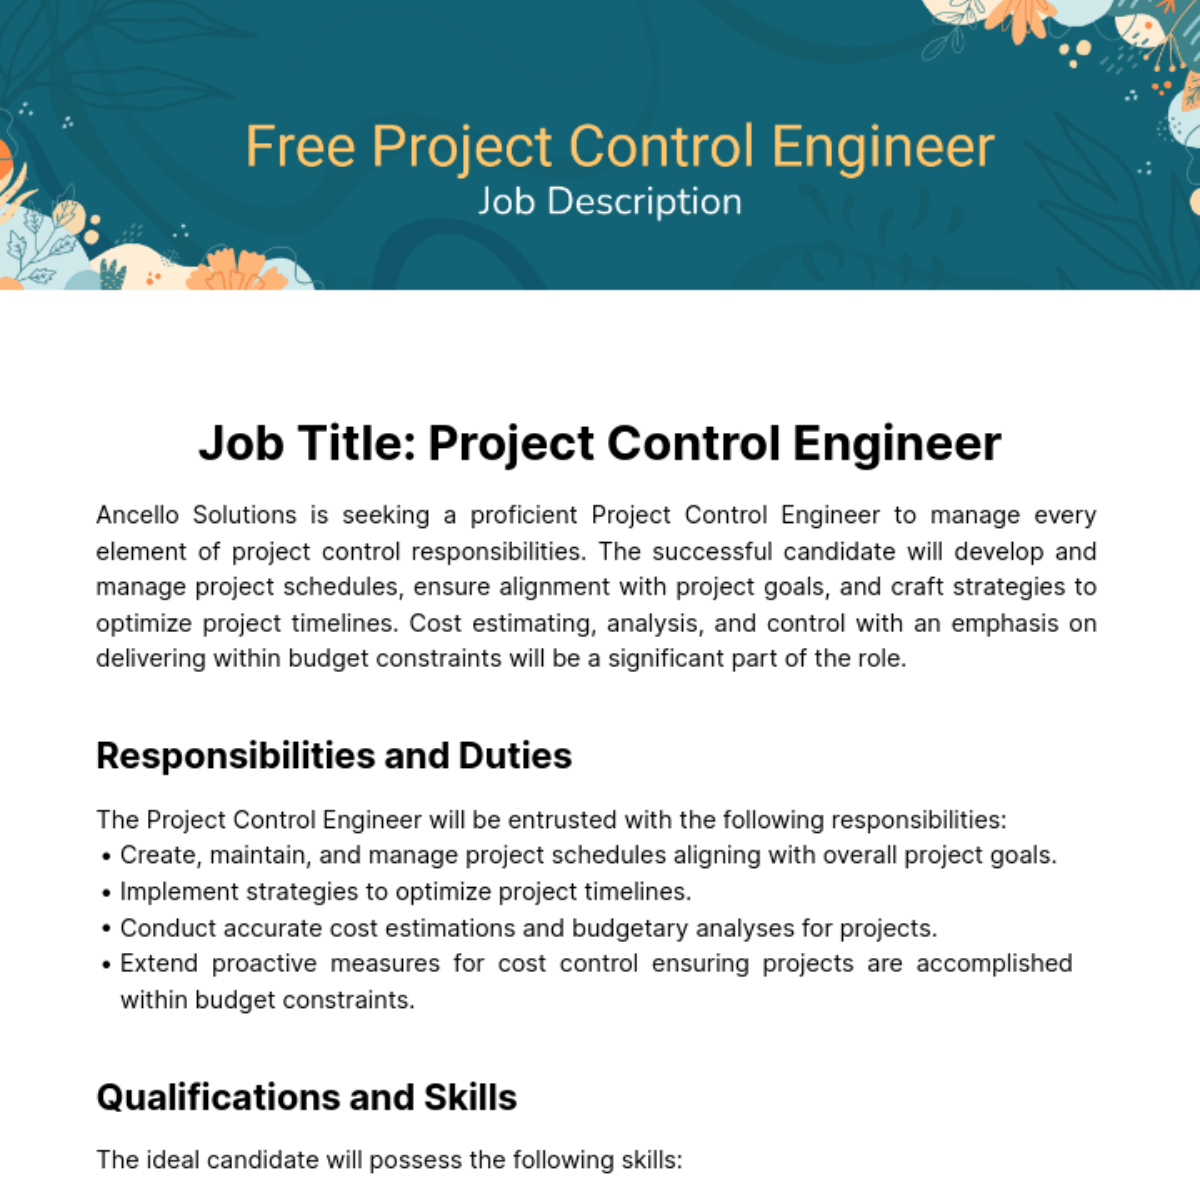 Free Project Control Engineer Job Description Template